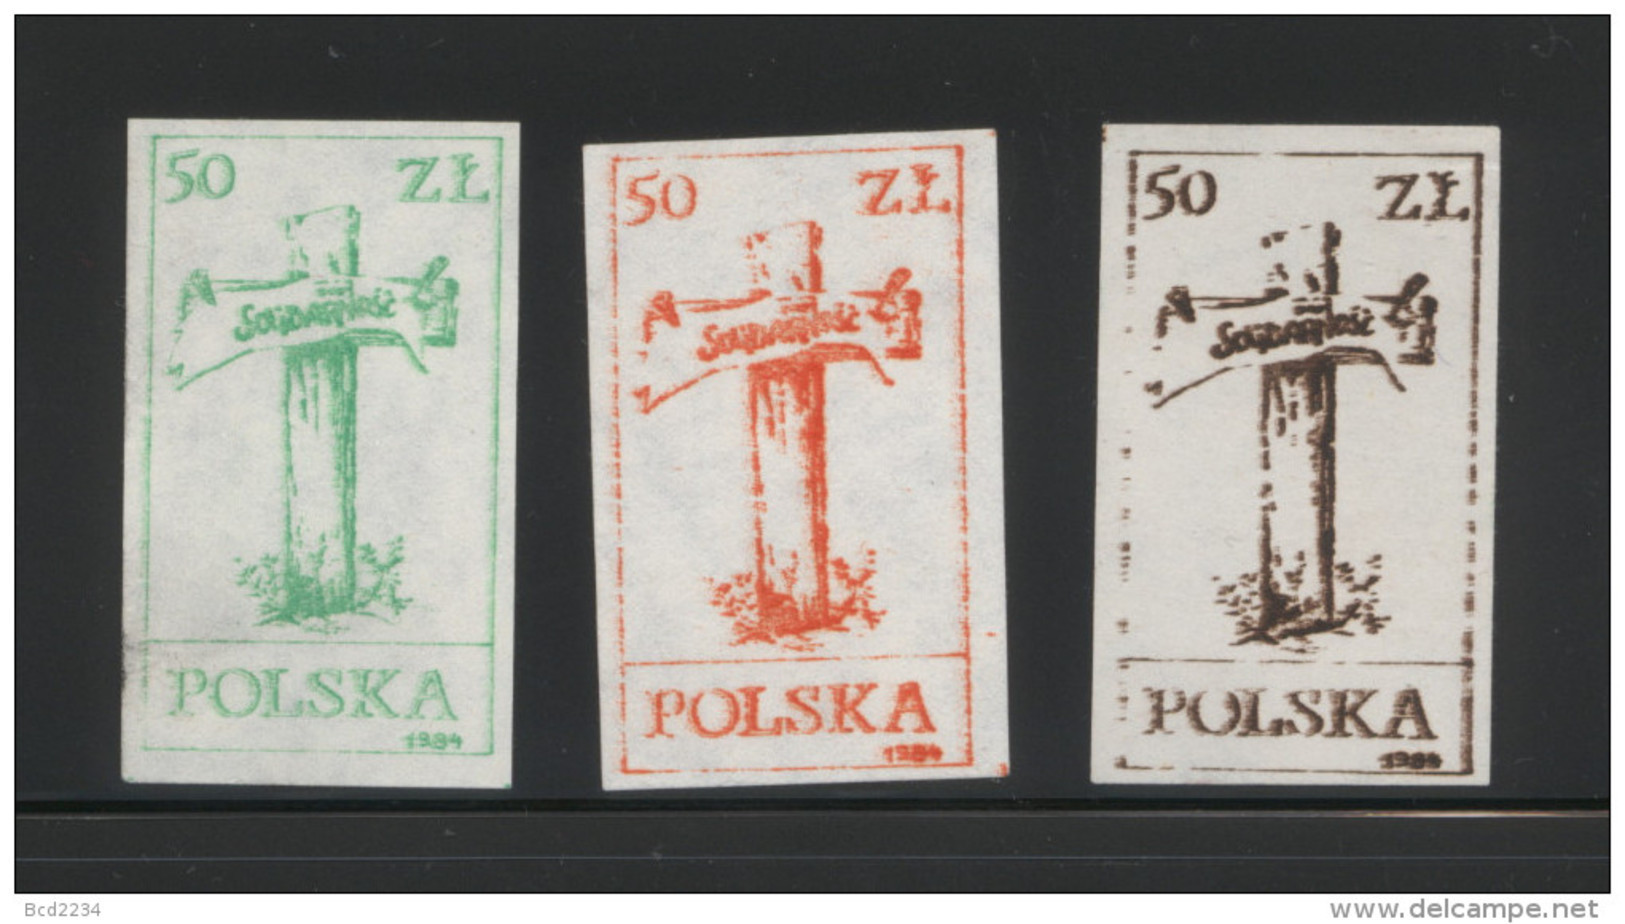 POLAND SOLIDARITY SOLIDARNOSC MSS WARSZAWA 1984 CROSSES SET OF 3 CHRISTIANITY RELIGION - Solidarnosc Labels